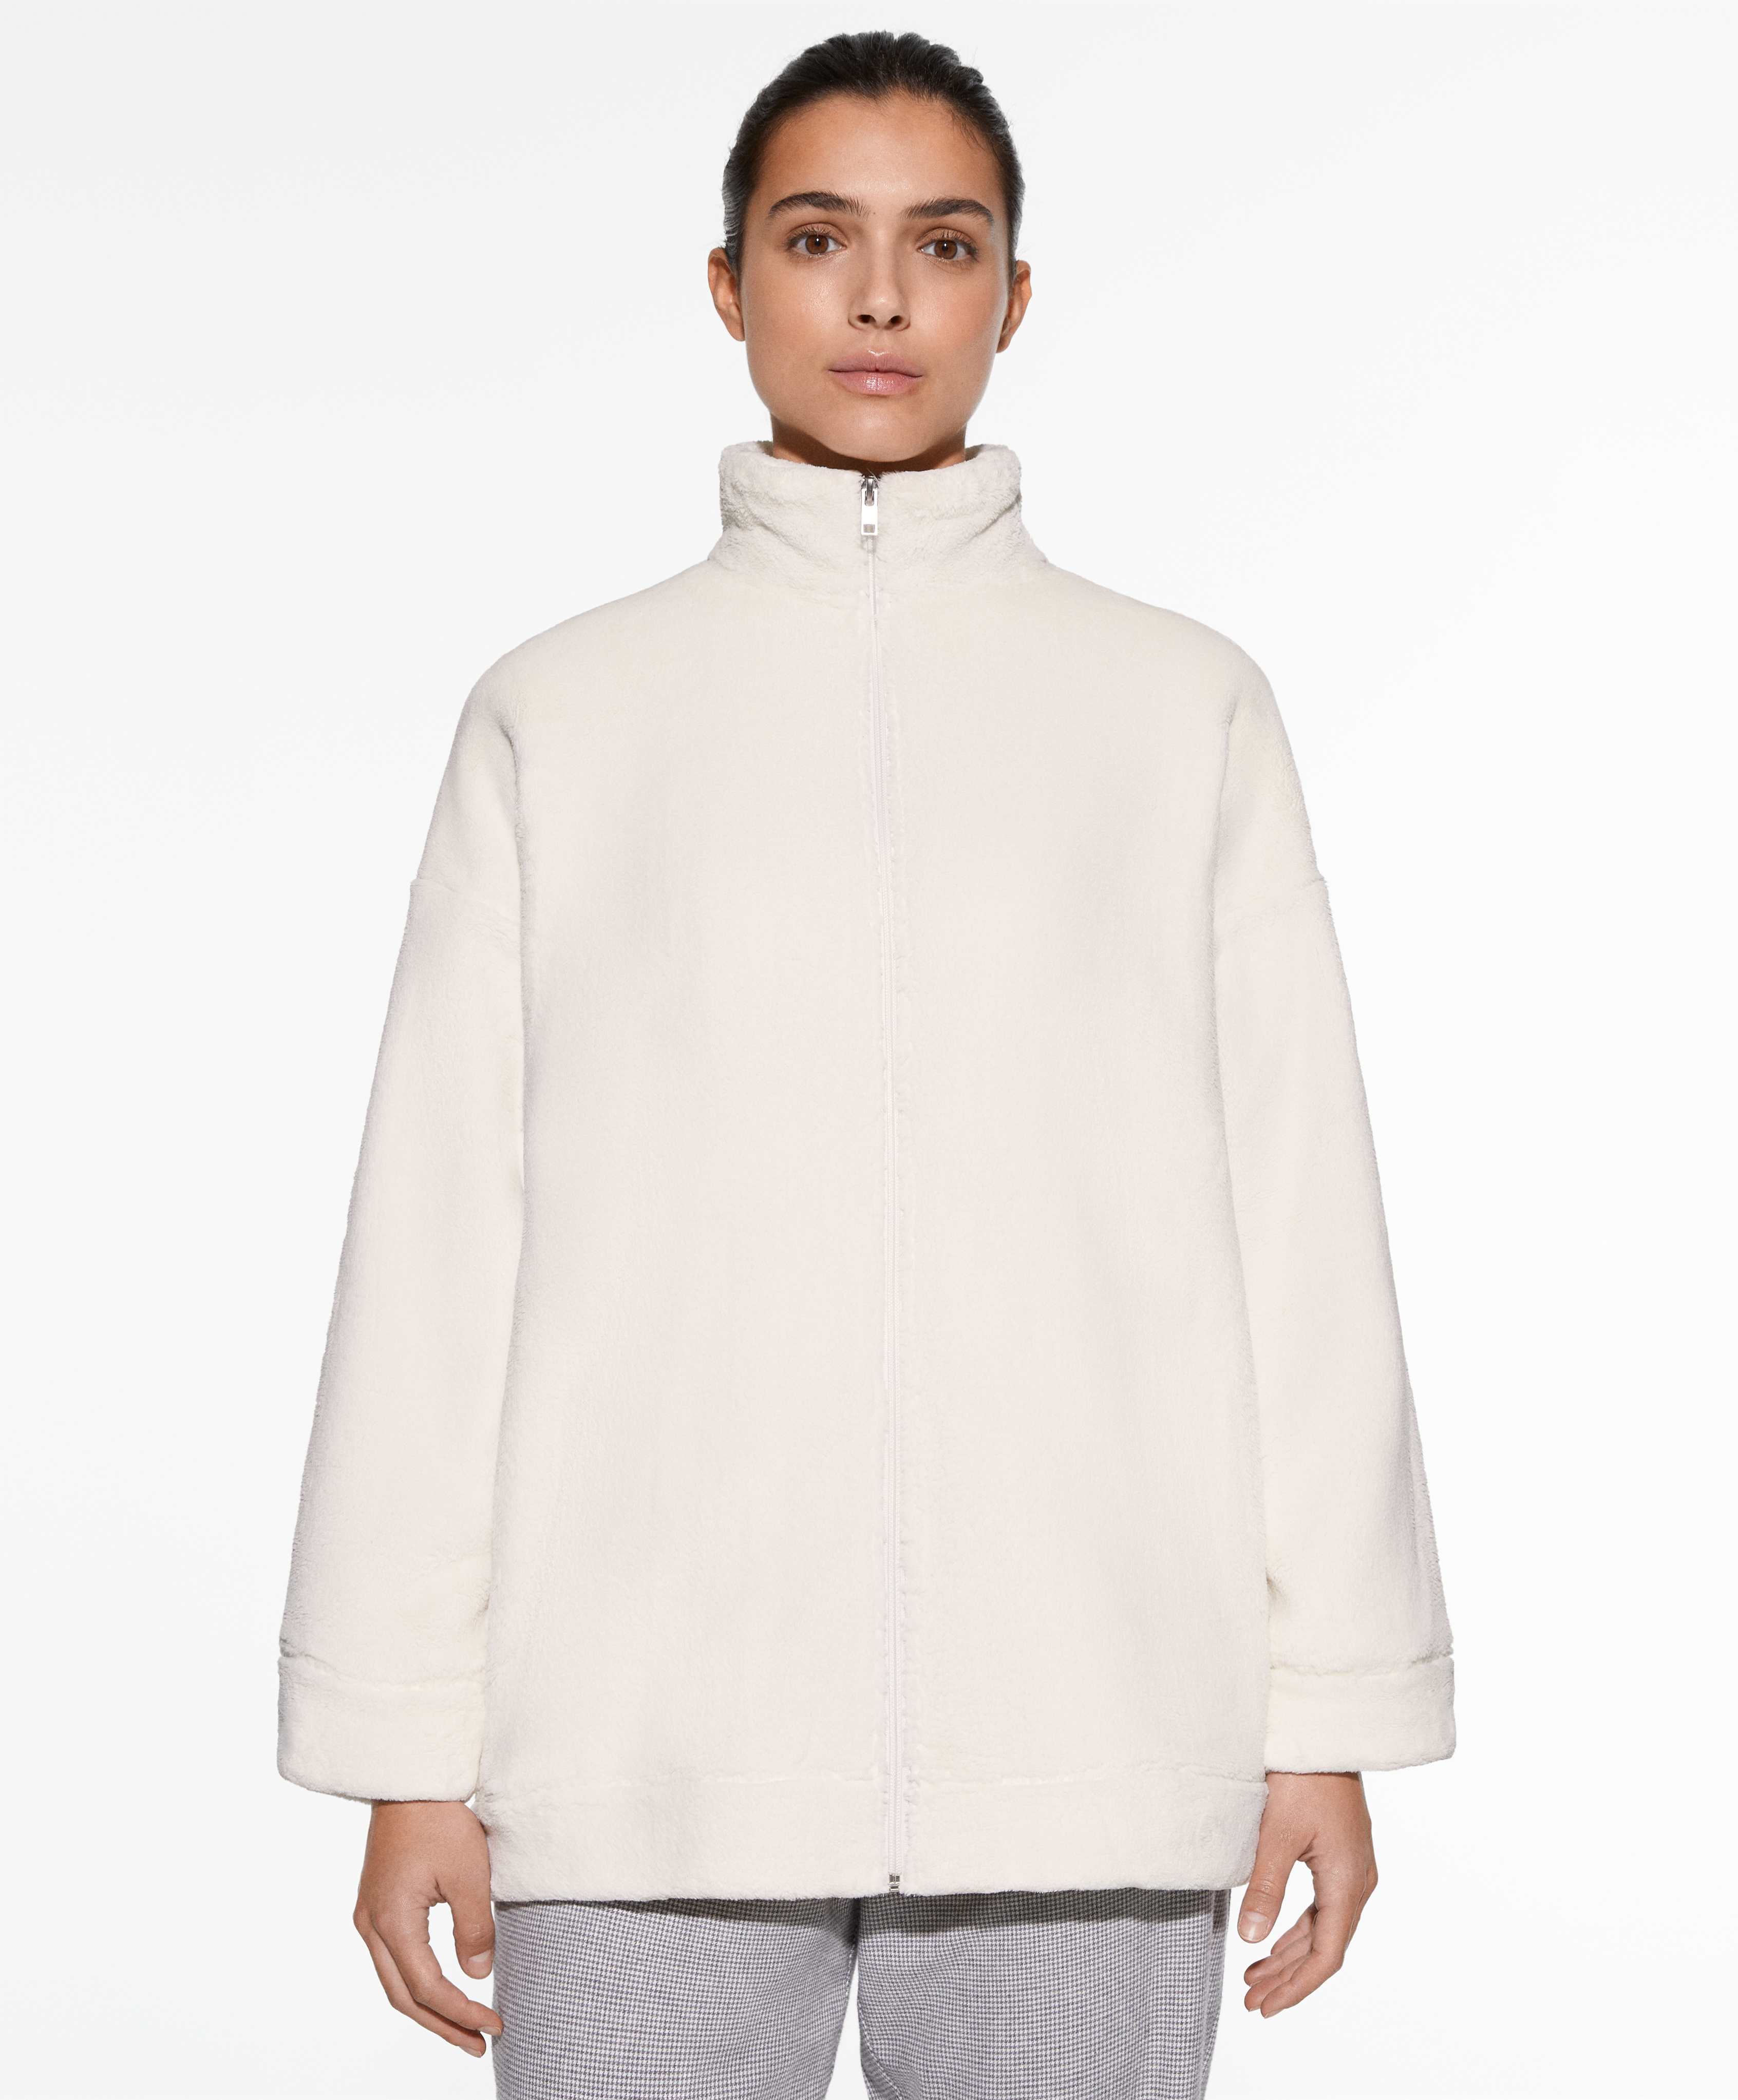 Zip-through fleece high-neck jacket